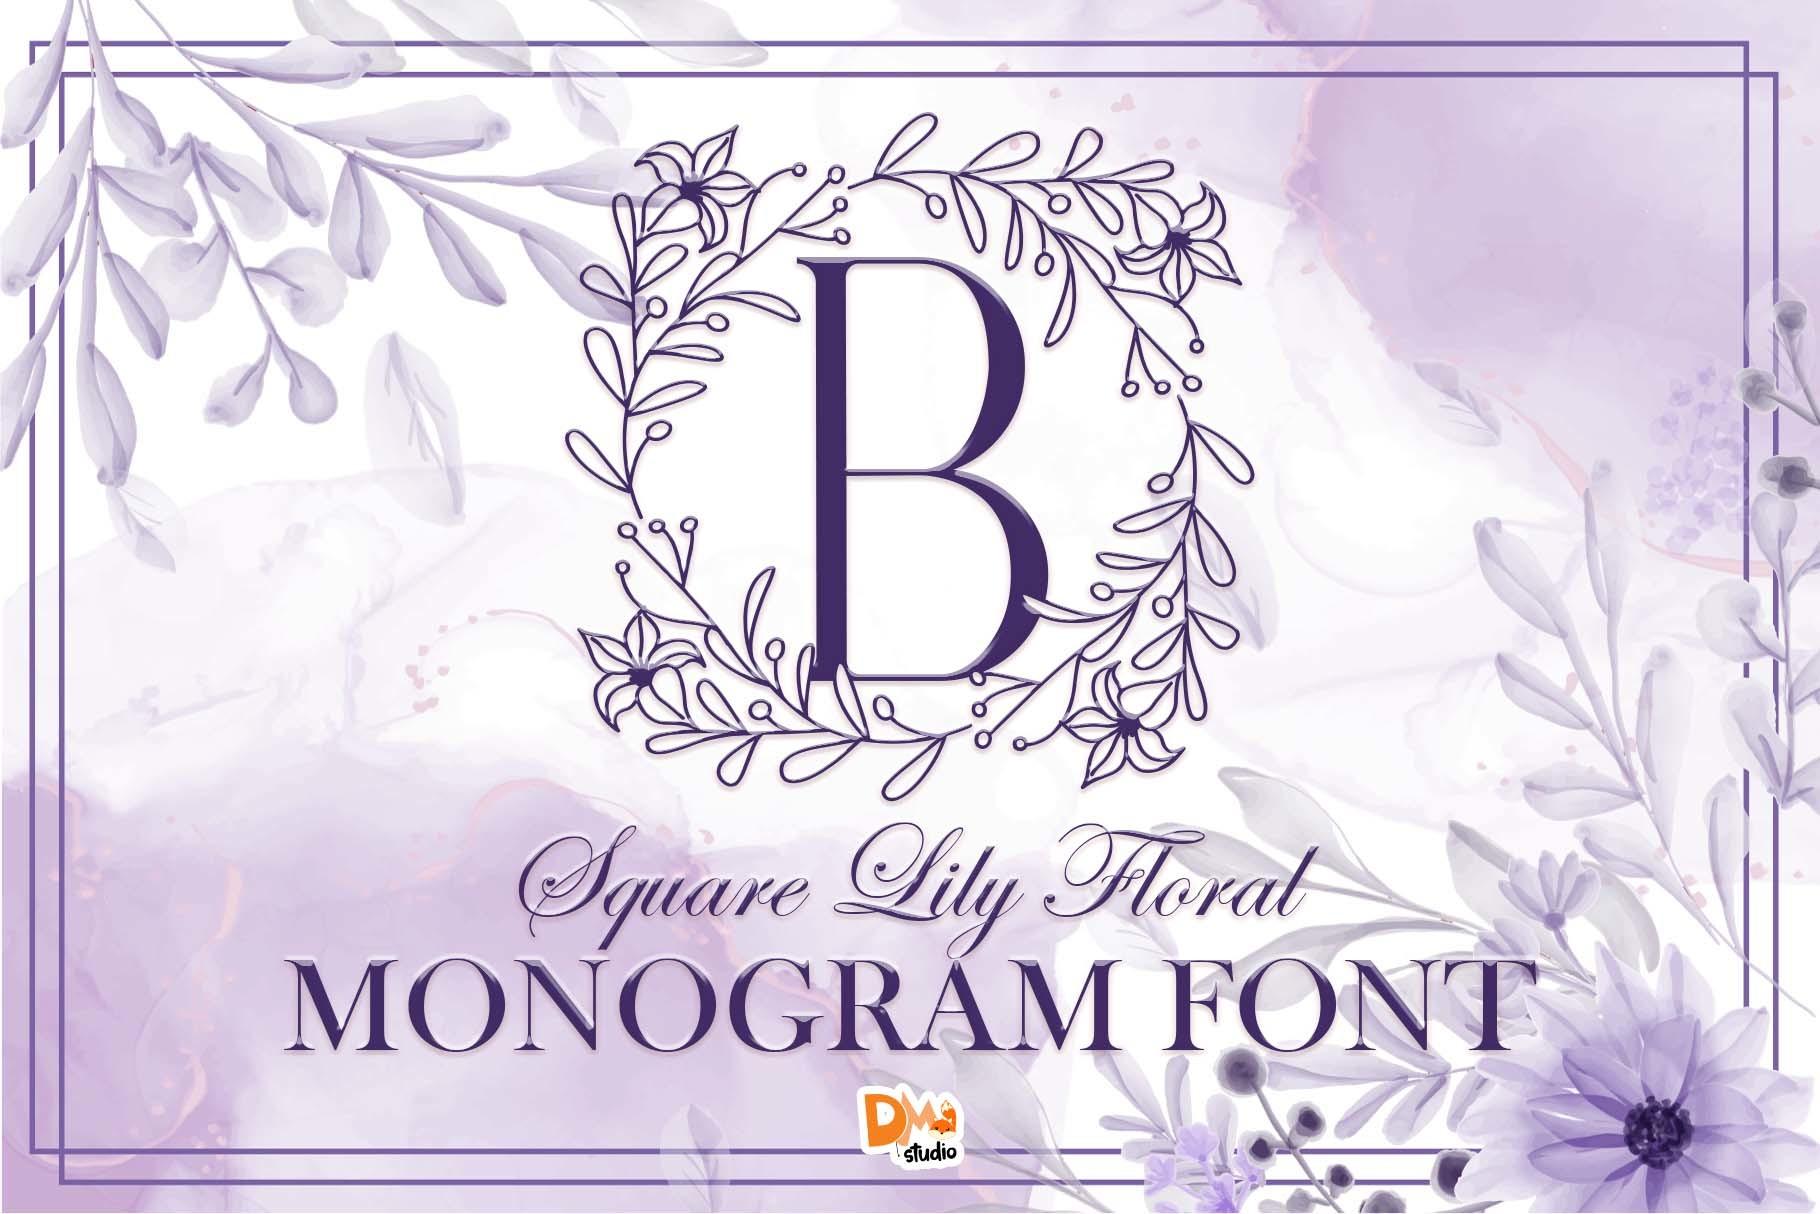 Square Lily Floral Monogram Font